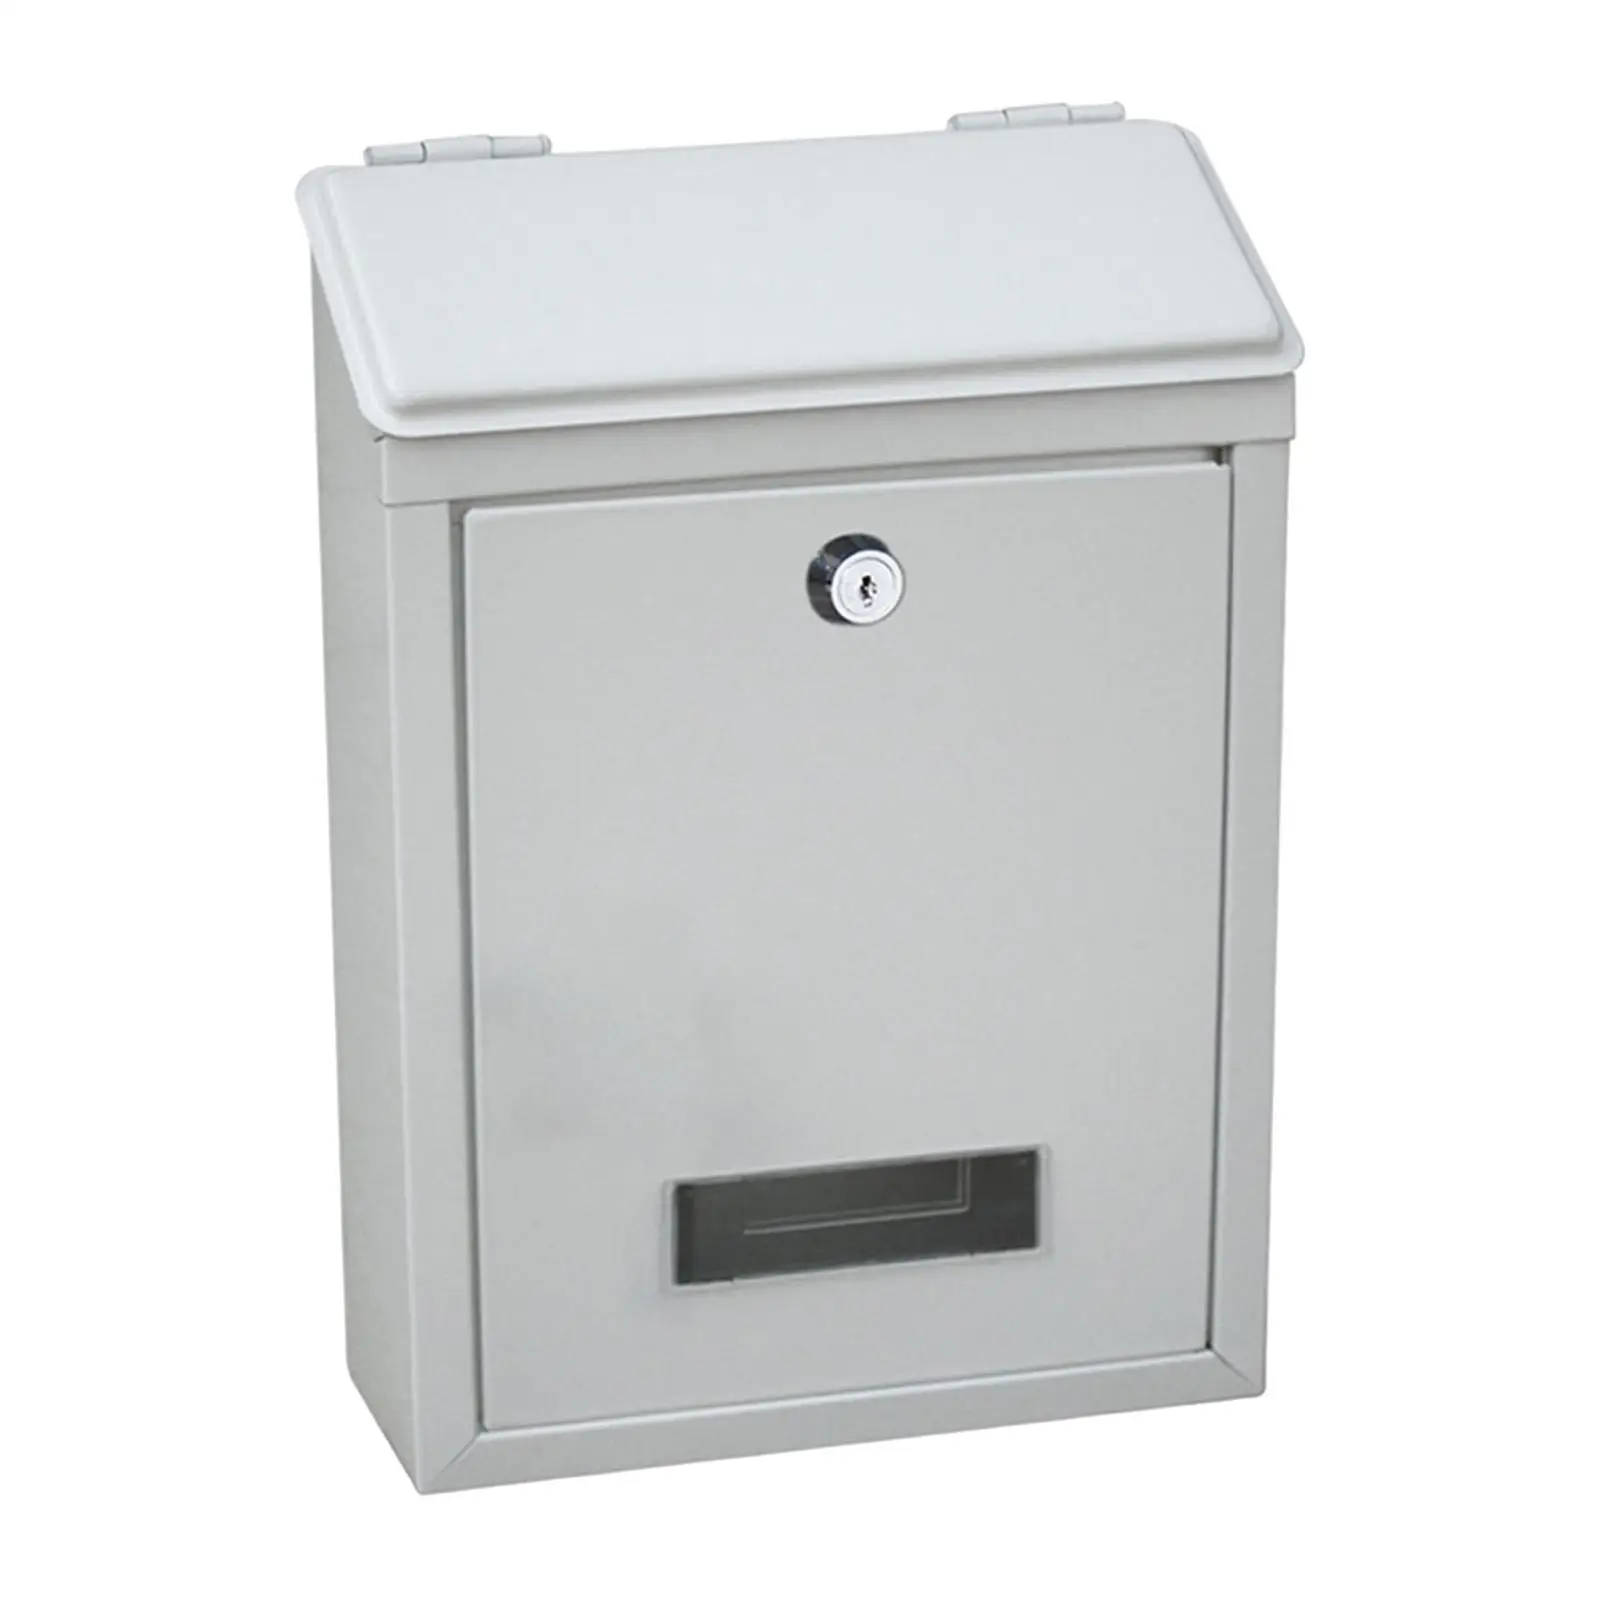 Modern Wall Mounted Mailbox Lockable Drop Box Mail Insertion for External